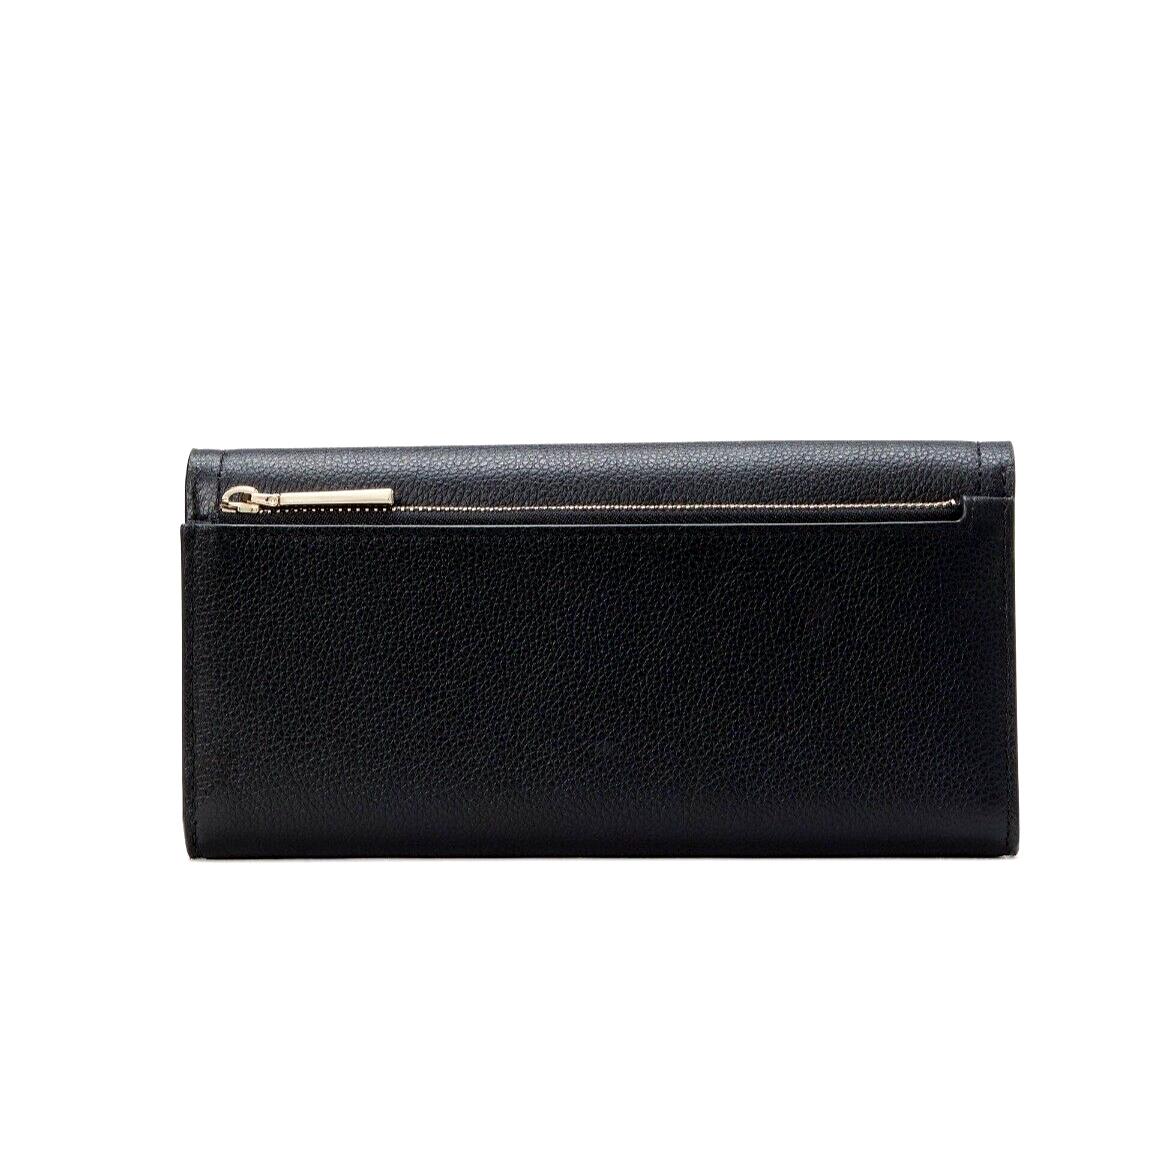 New Kate Spade Rosie Large Flap Wallet Pebble Leather Black